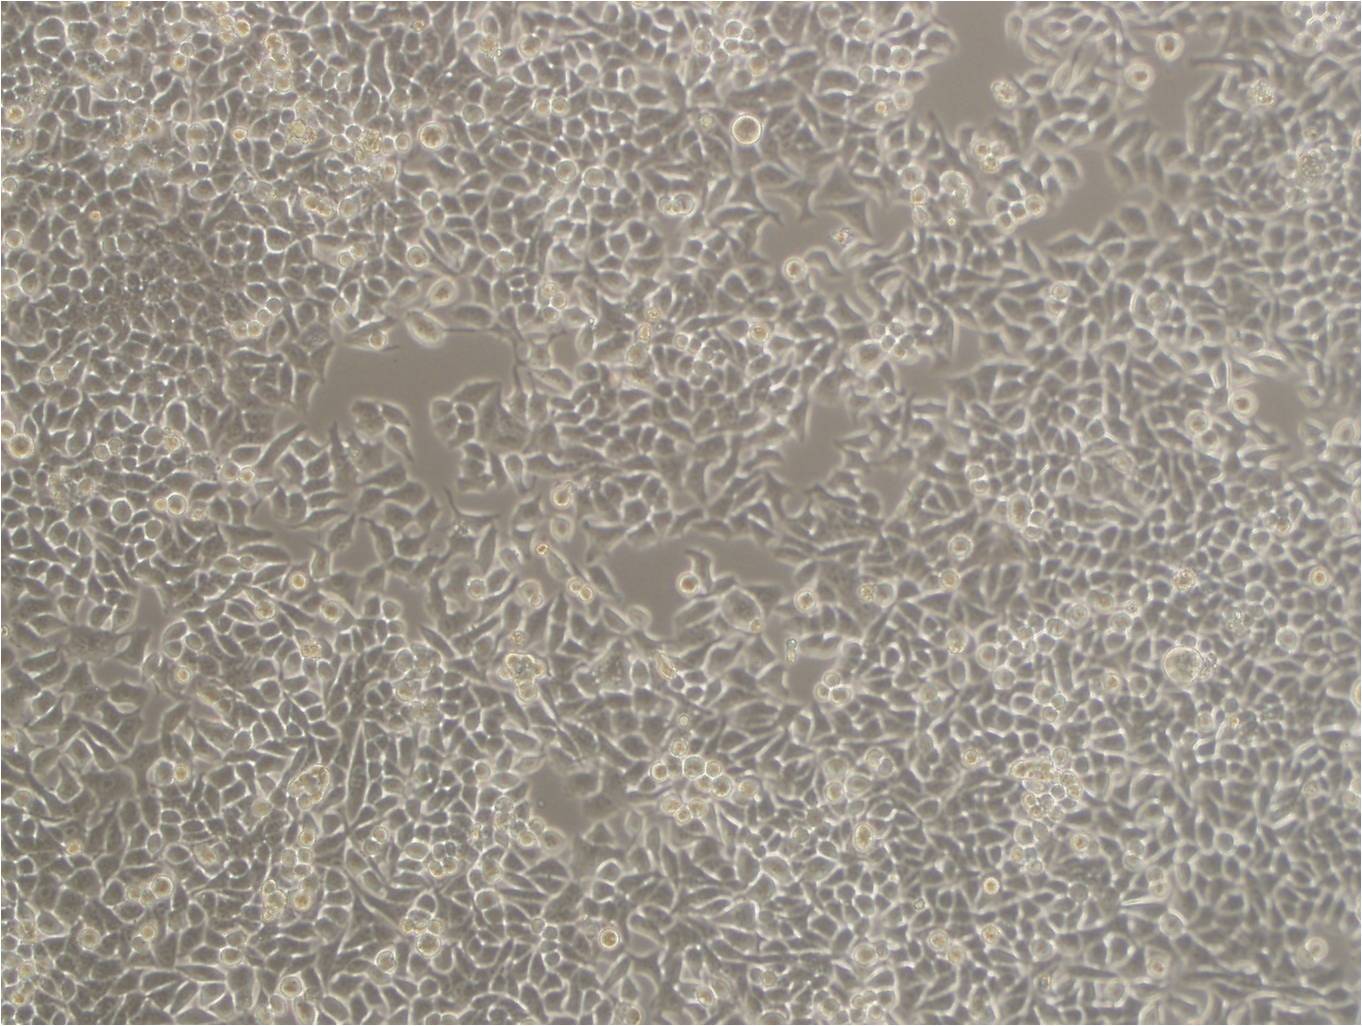 KTCTL-140 Cell|人肾透明细胞癌细胞,KTCTL-140 Cell